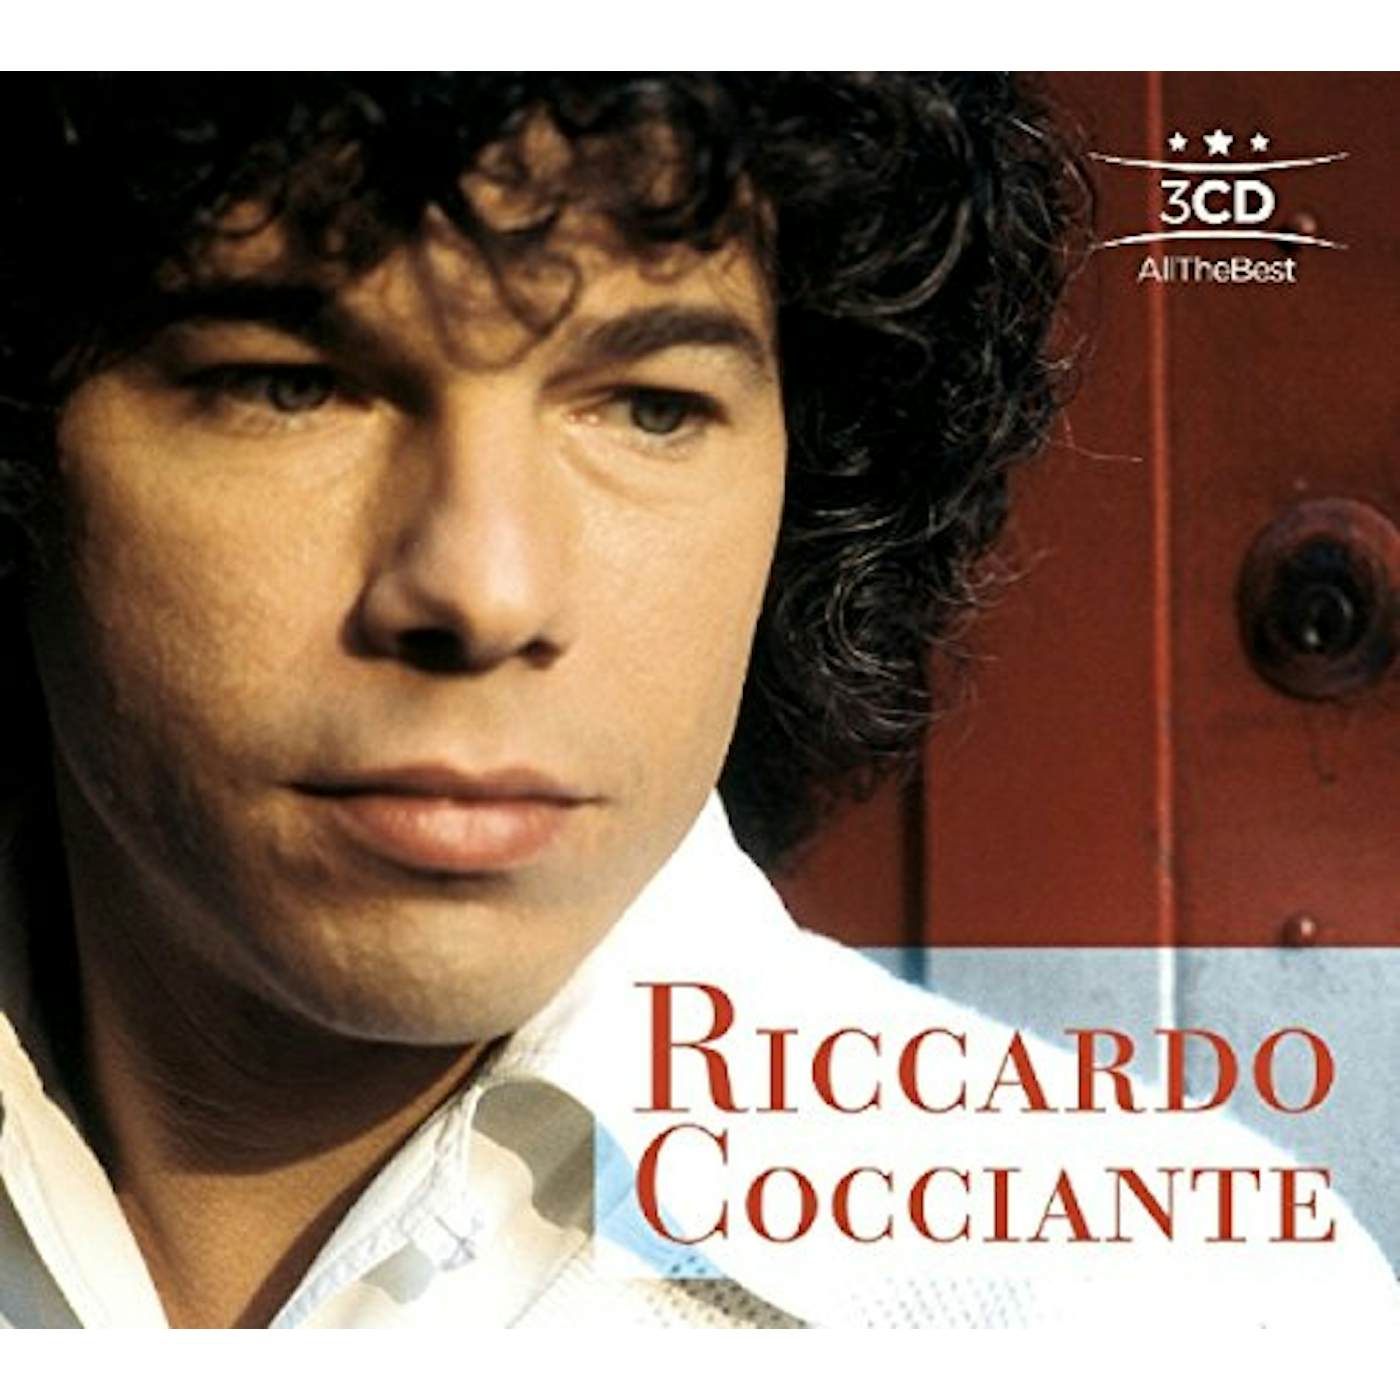 RICCARDO COCCIANTEALL THE BEST CD